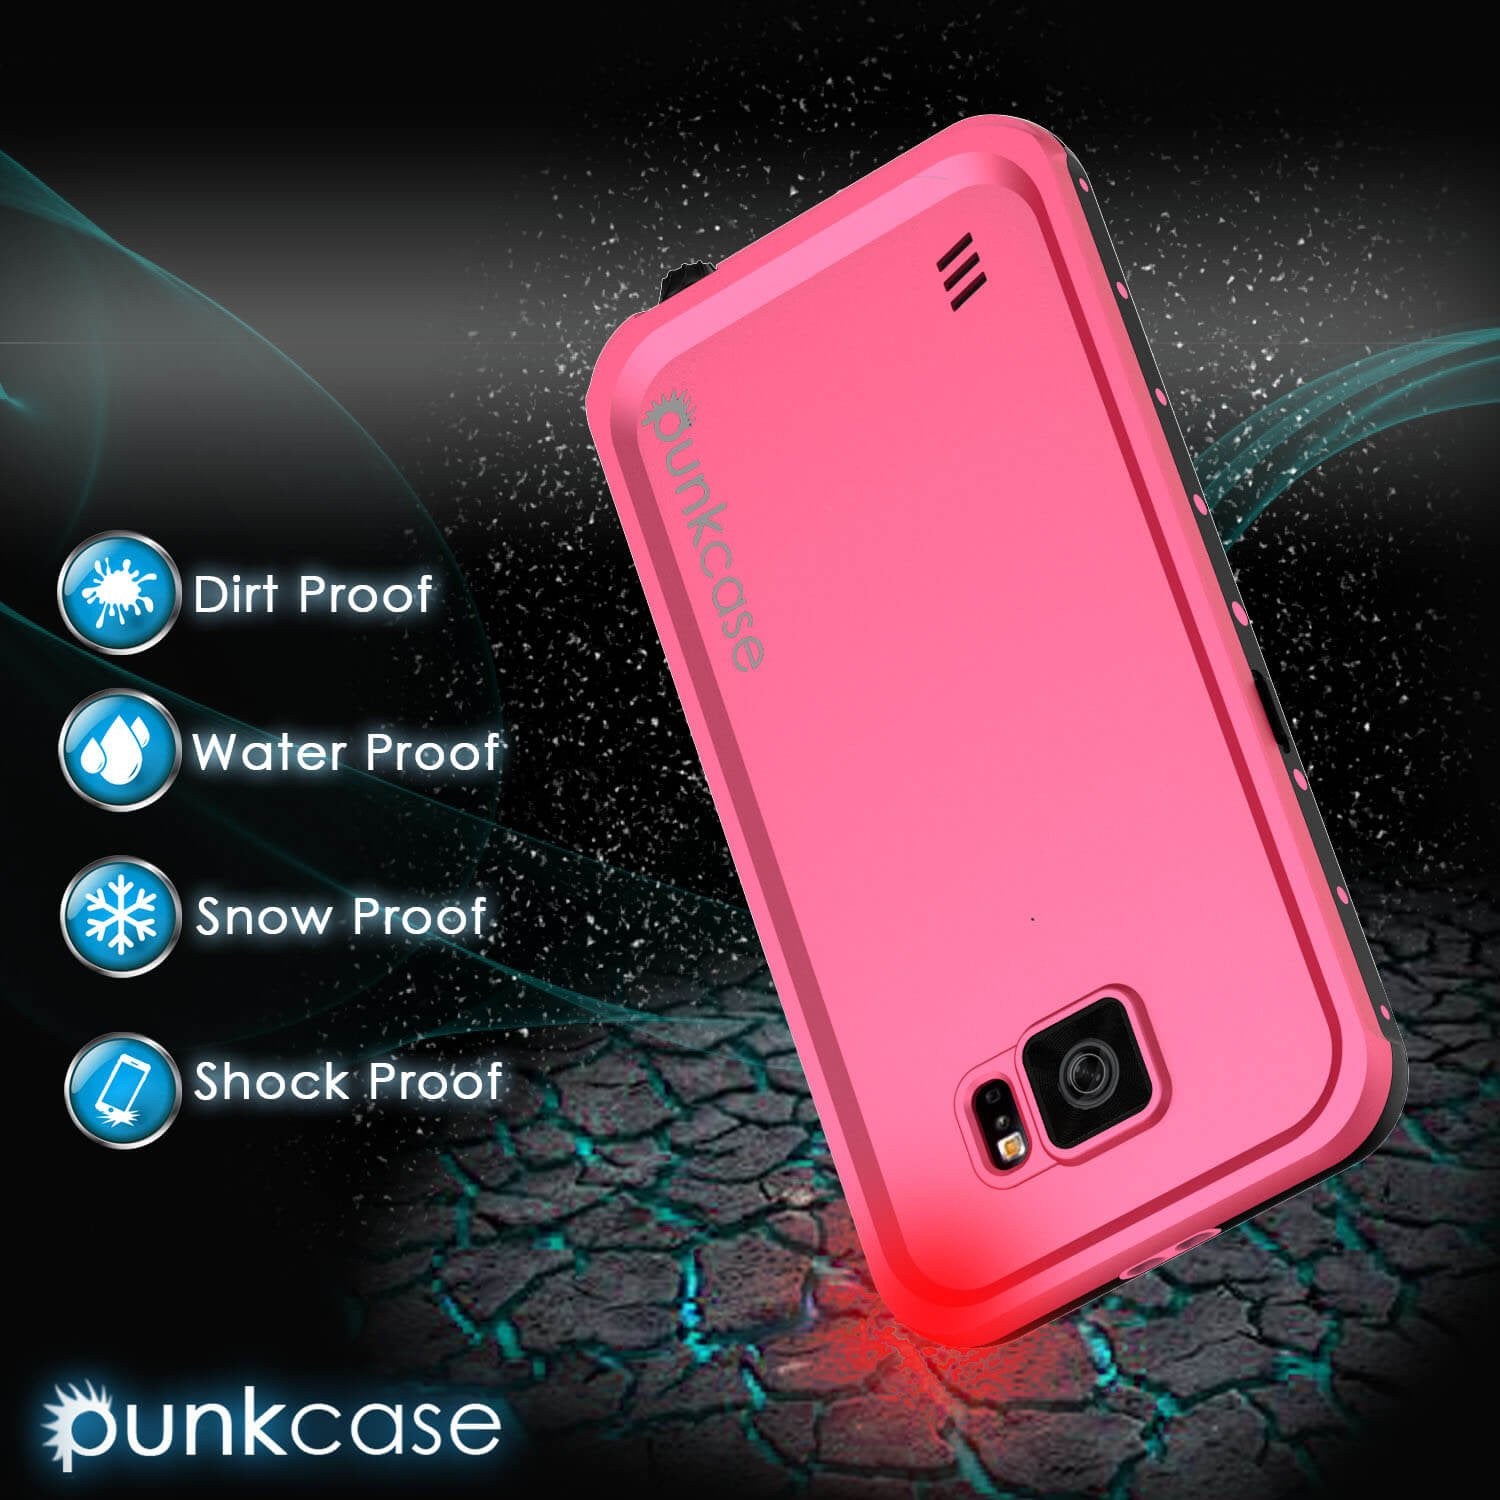 Galaxy S6 Waterproof Case PunkCase StudStar Pink Thin 6.6ft Underwater IP68 Shock/Dirt/Snow Proof - PunkCase NZ